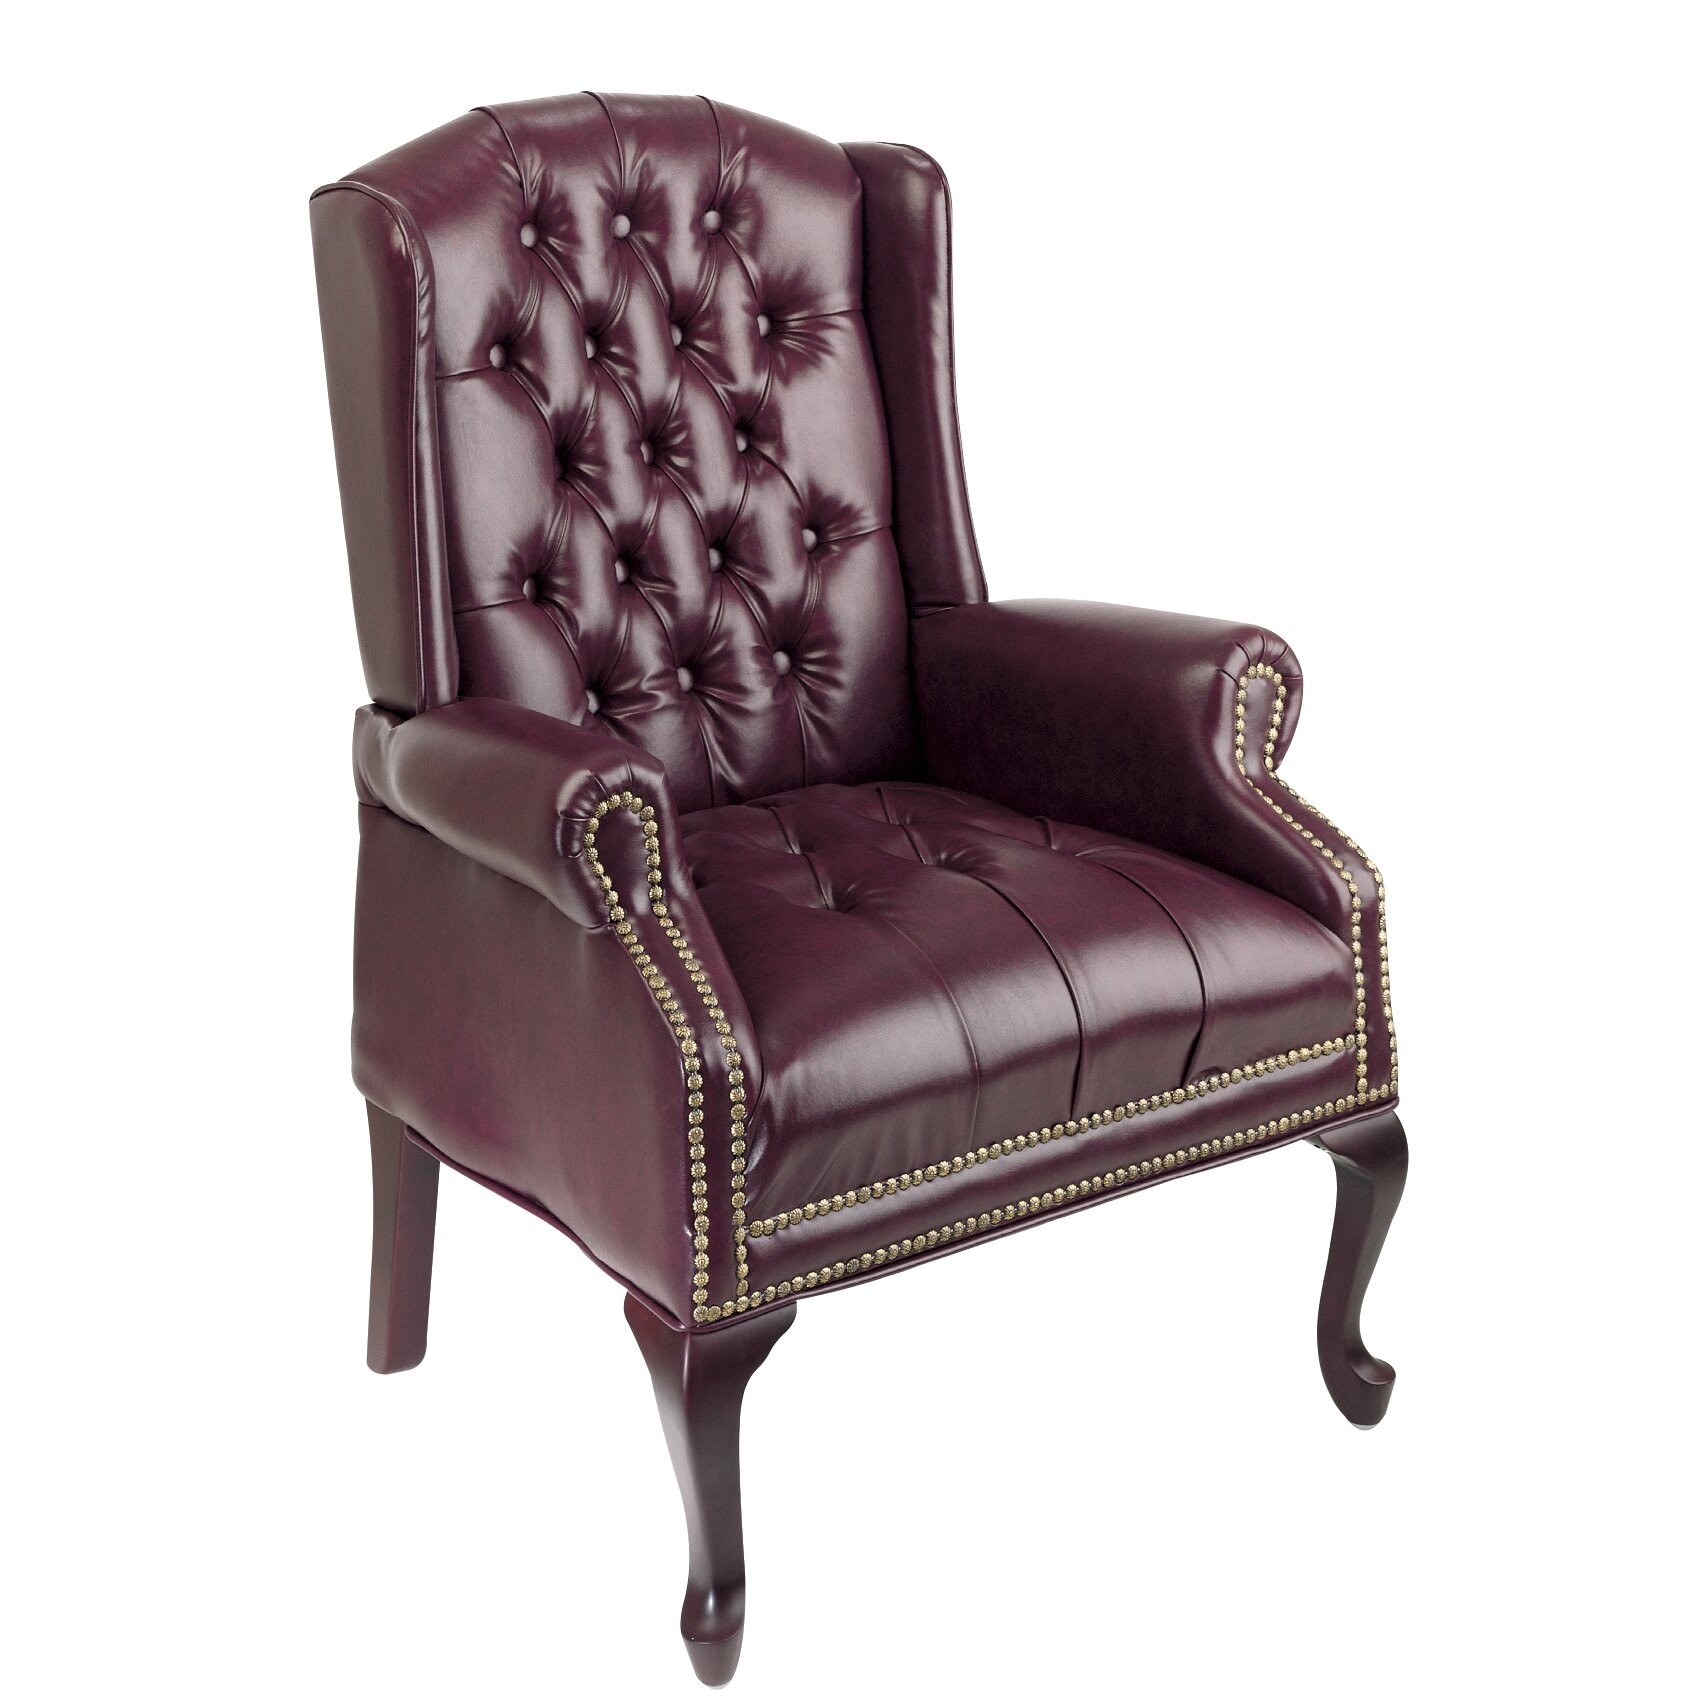 Traditional Queen Ann Style Chair